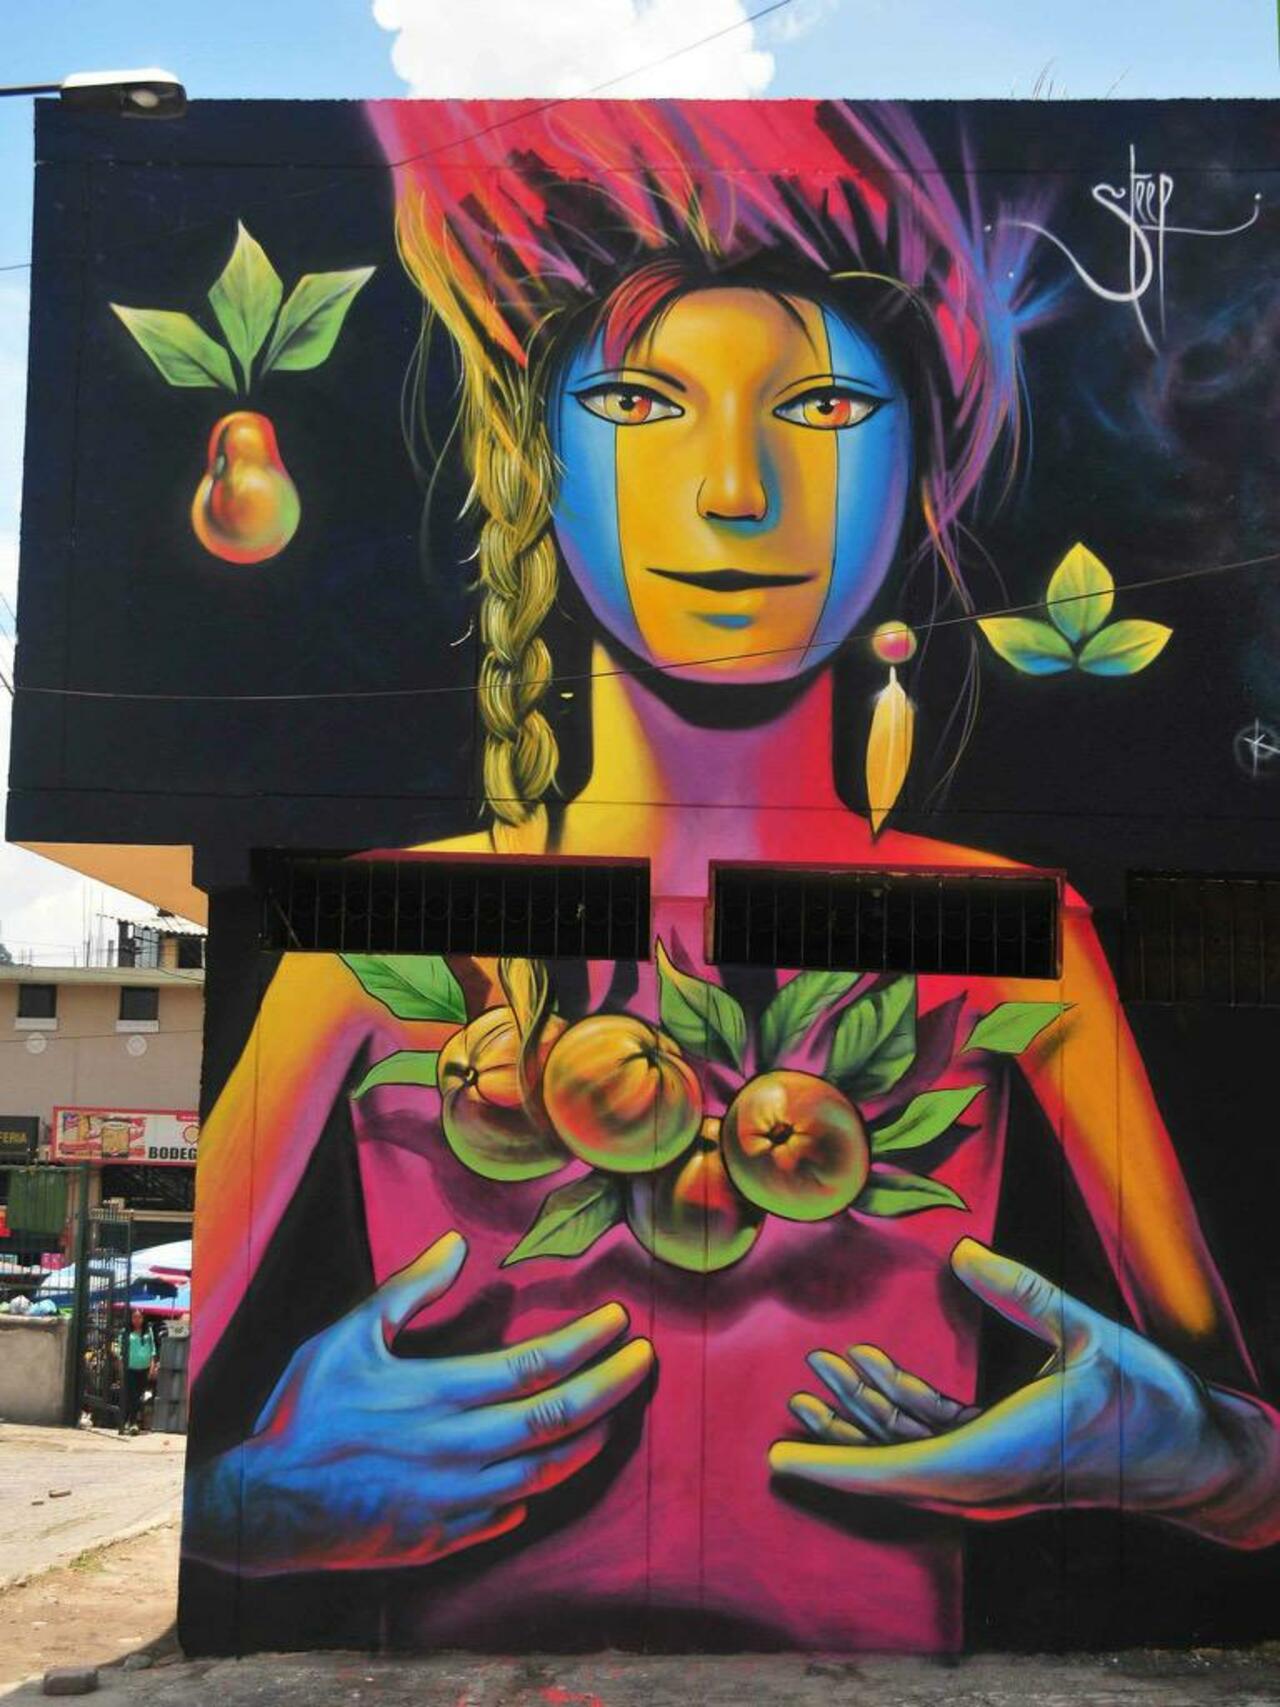 Street Art by Steep

#art #graffiti #mural #streetart http://t.co/F4R6dr1Yw6